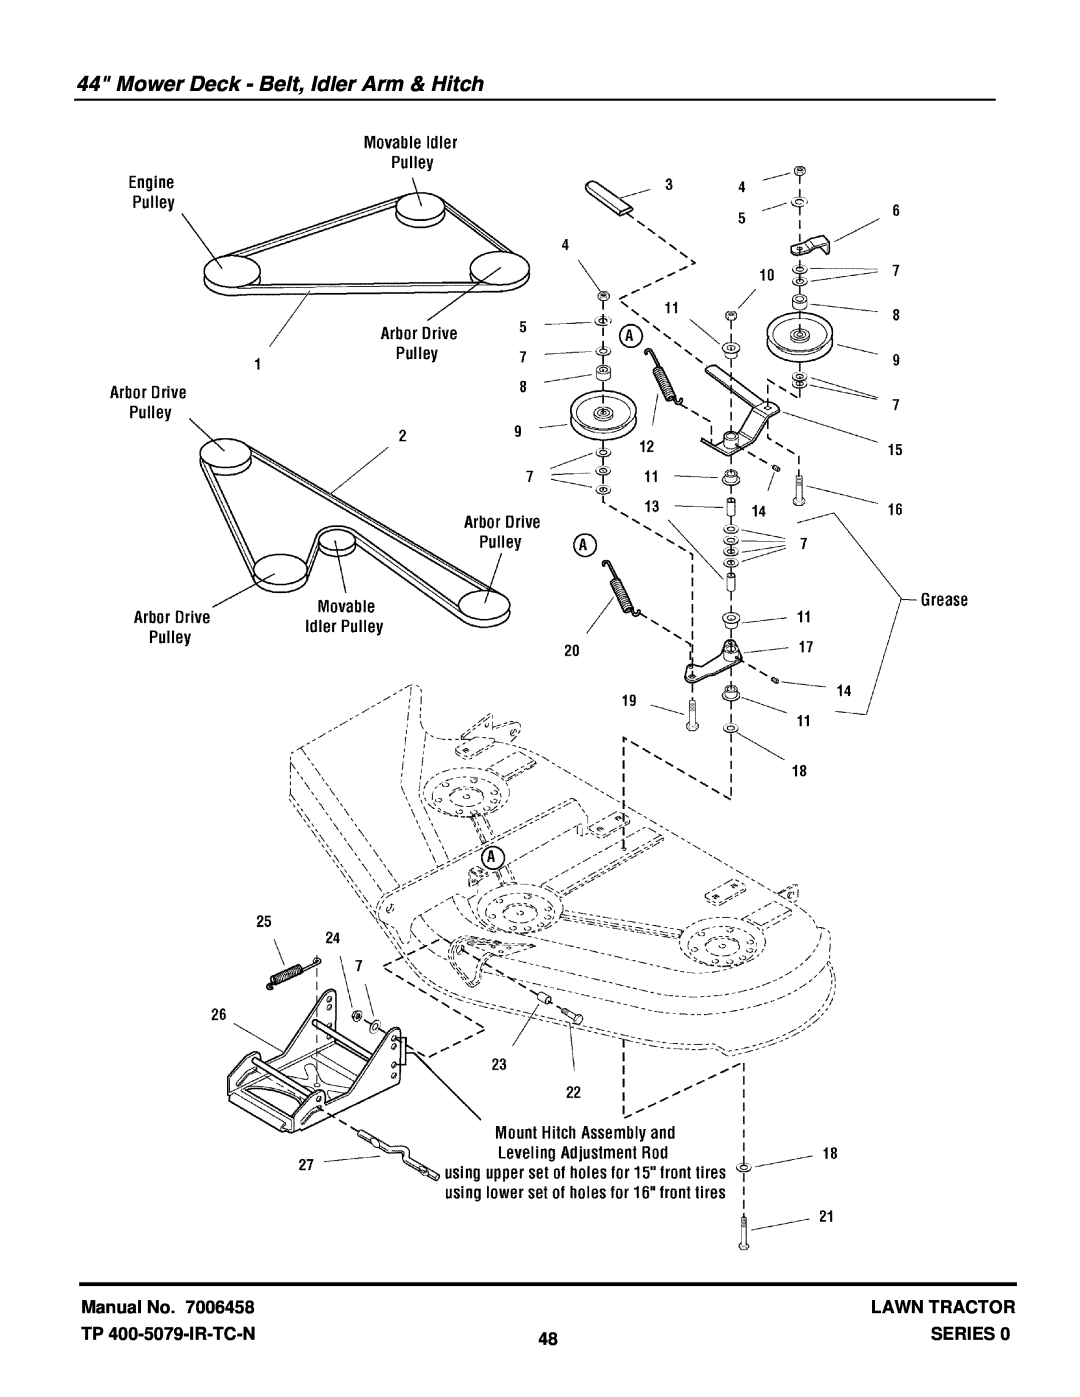 Snapper LT20440, LT18400 manual Mower Deck - Belt, Idler Arm & Hitch, Manual No, Lawn Tractor, TP 400-5079-IR-TC-N, Series 